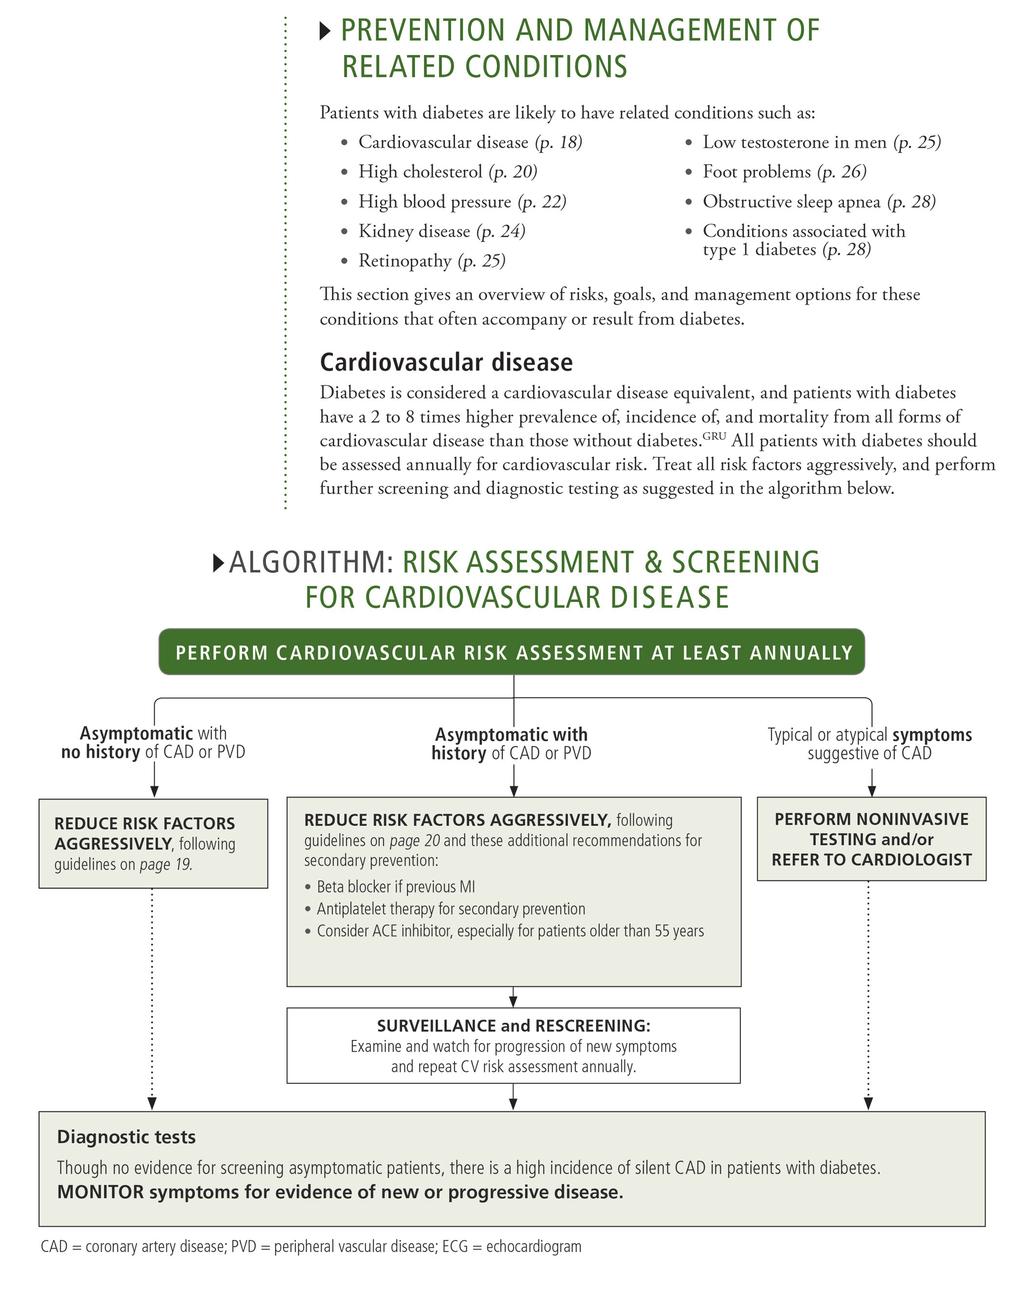 TOOL: CARDIOVASCULAR DISEASE ALGORITHM INTERMOUNTAIN HEALTHCARE Used with permission